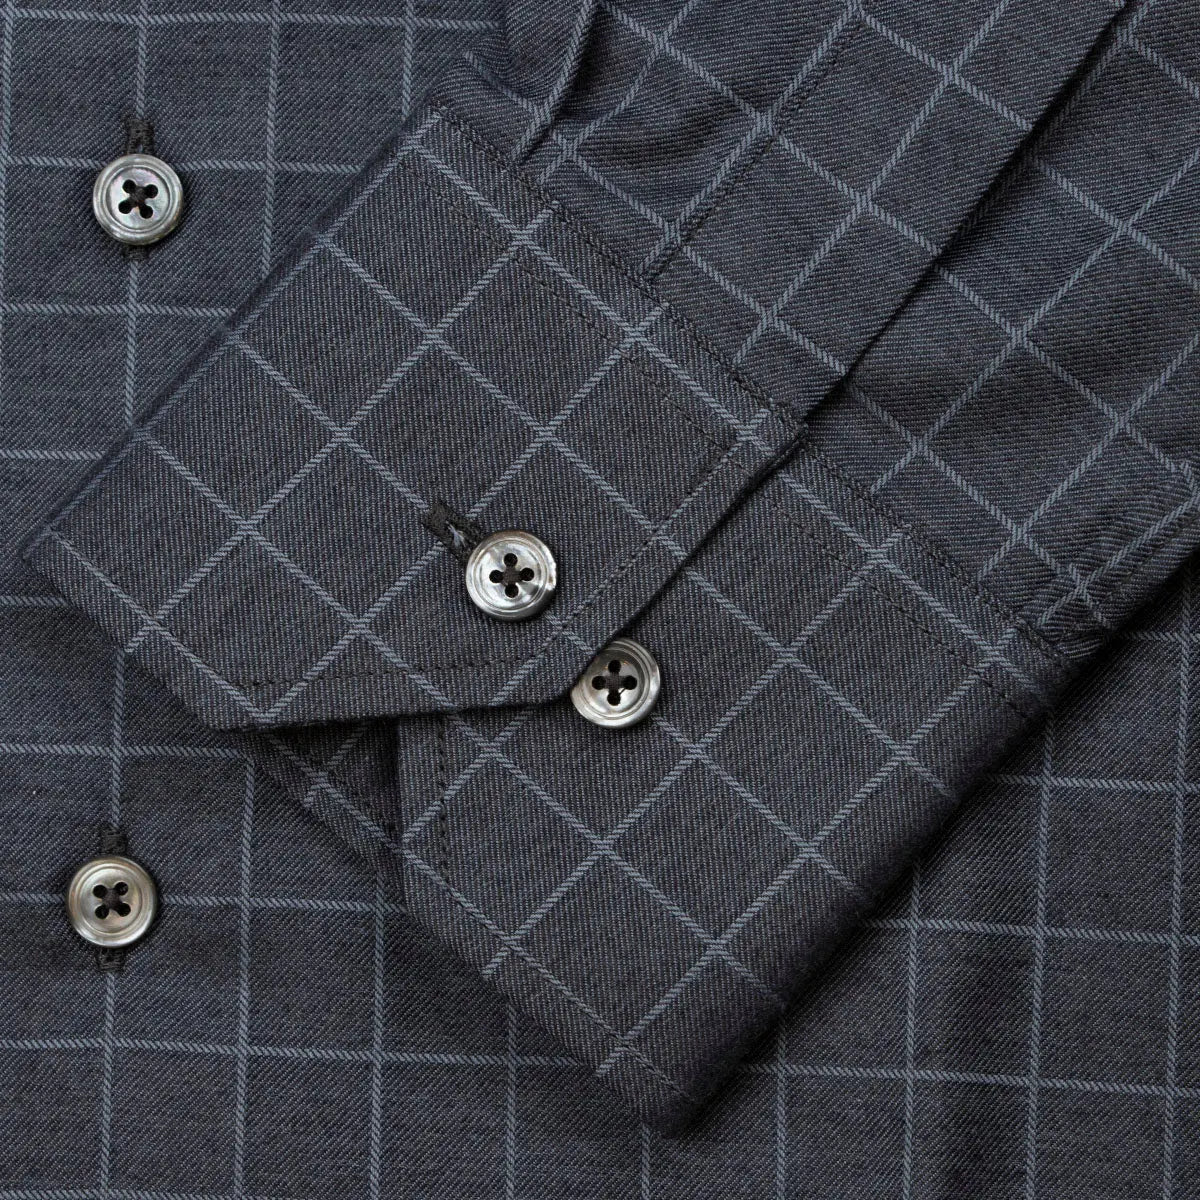 Charcoal Check Flanello Junior Cotton Long Sleeve Shirt  Robert Old   